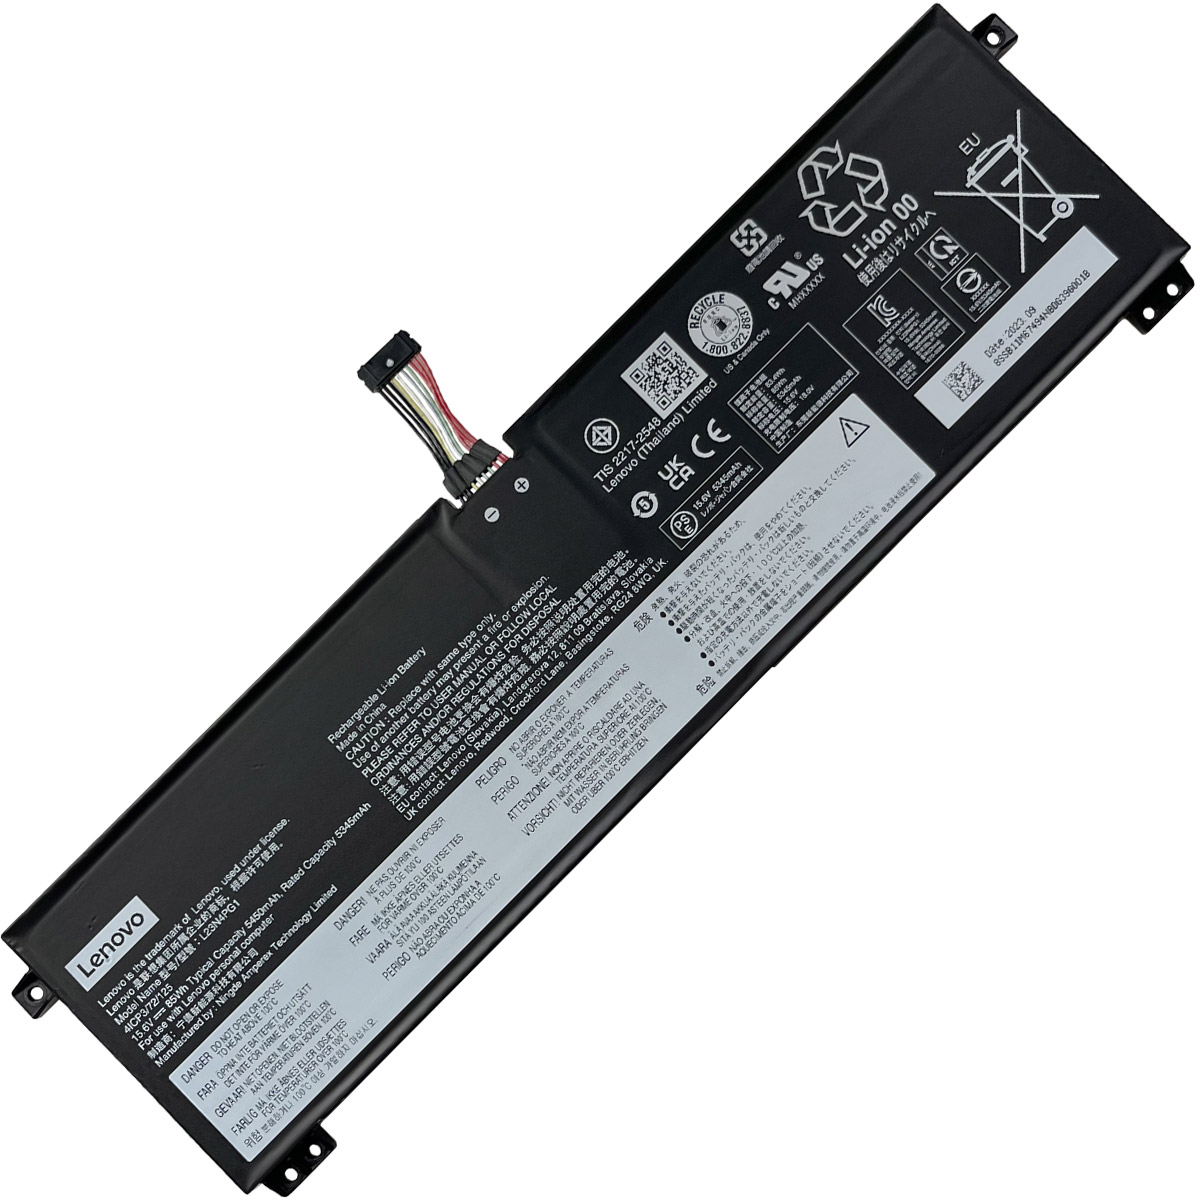 LENOVO-L23N4PG1/L23D4PG1-Laptop Replacement Battery